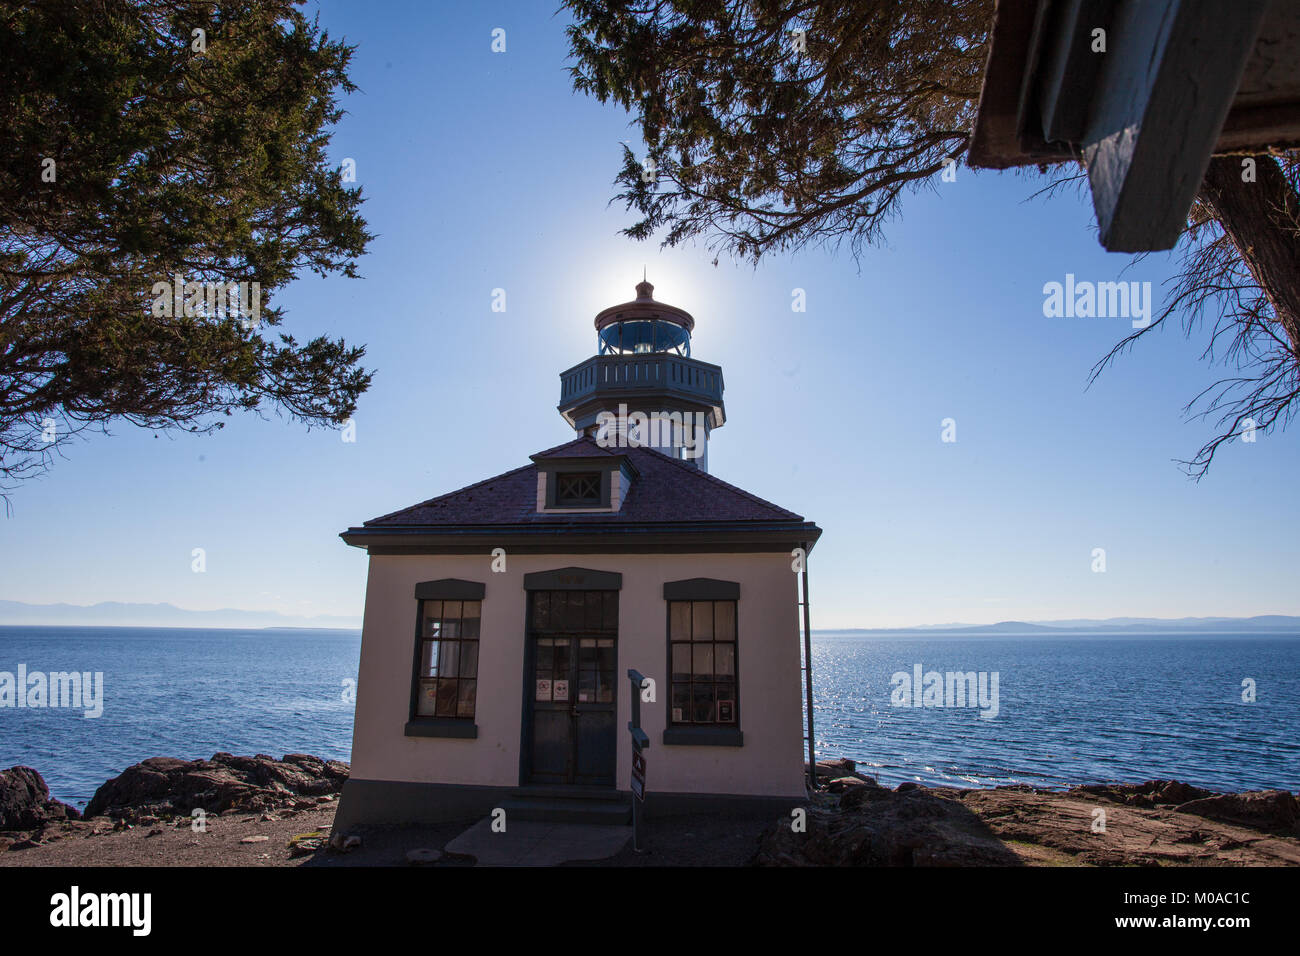 San Juan Lighthouse on the Ocean Stock Photo